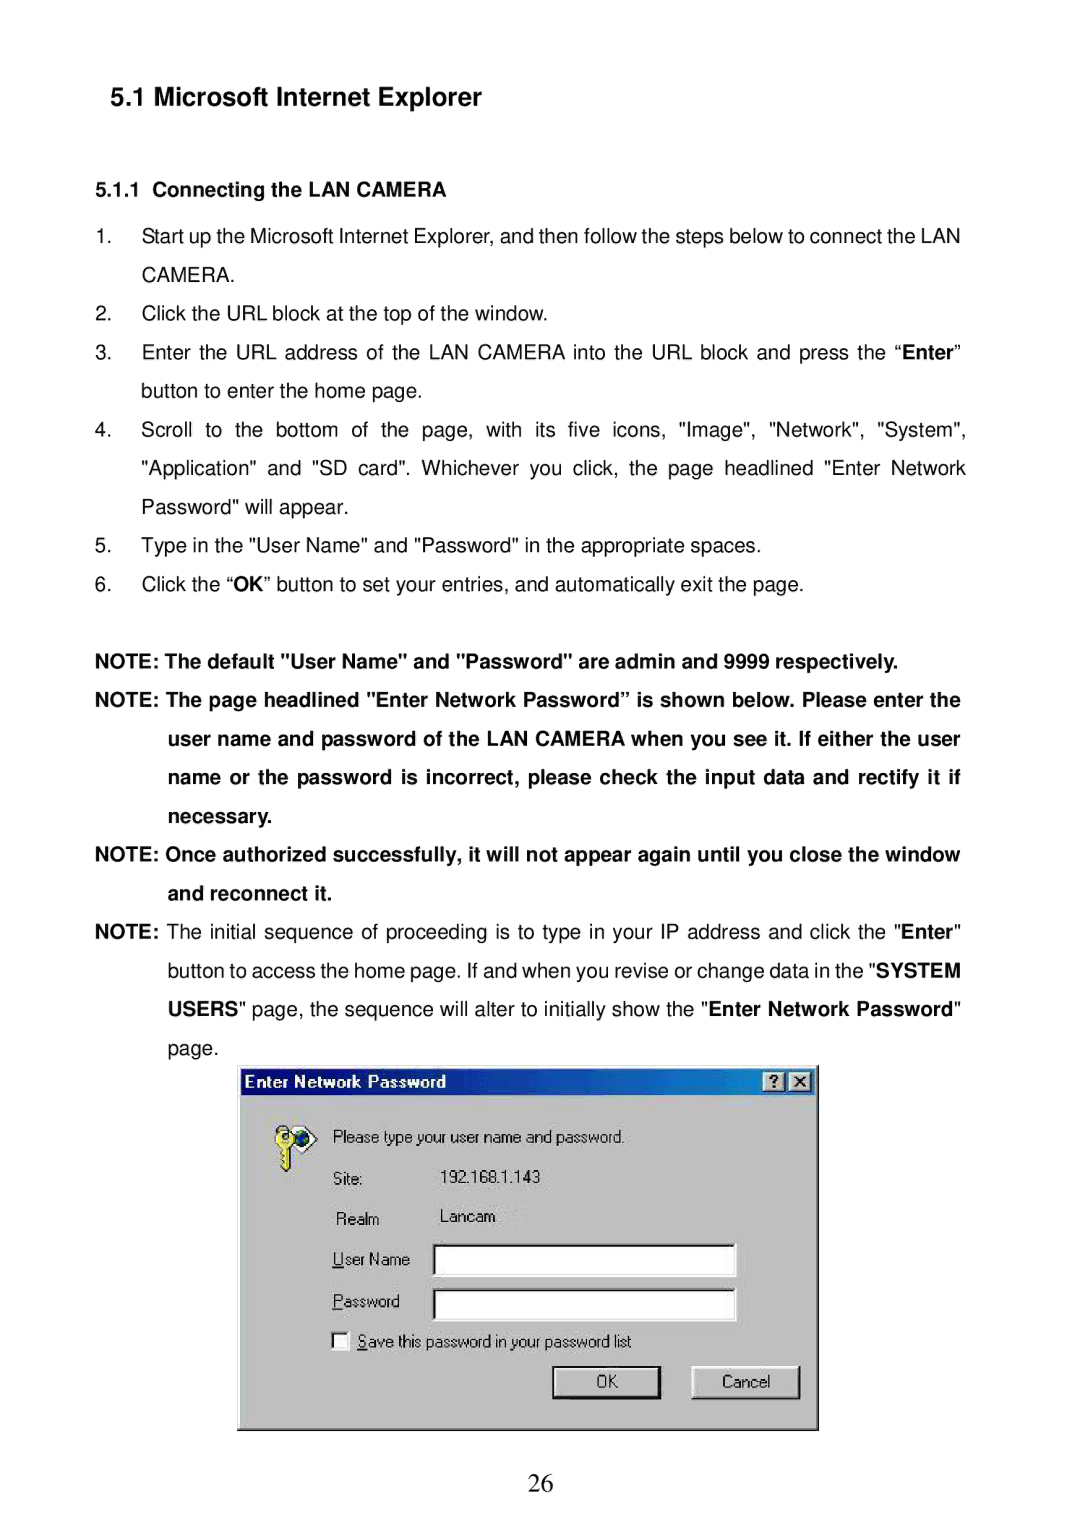 Sony MPEG4 LAN Camera operation manual Microsoft Internet Explorer, Connecting the LAN Camera 